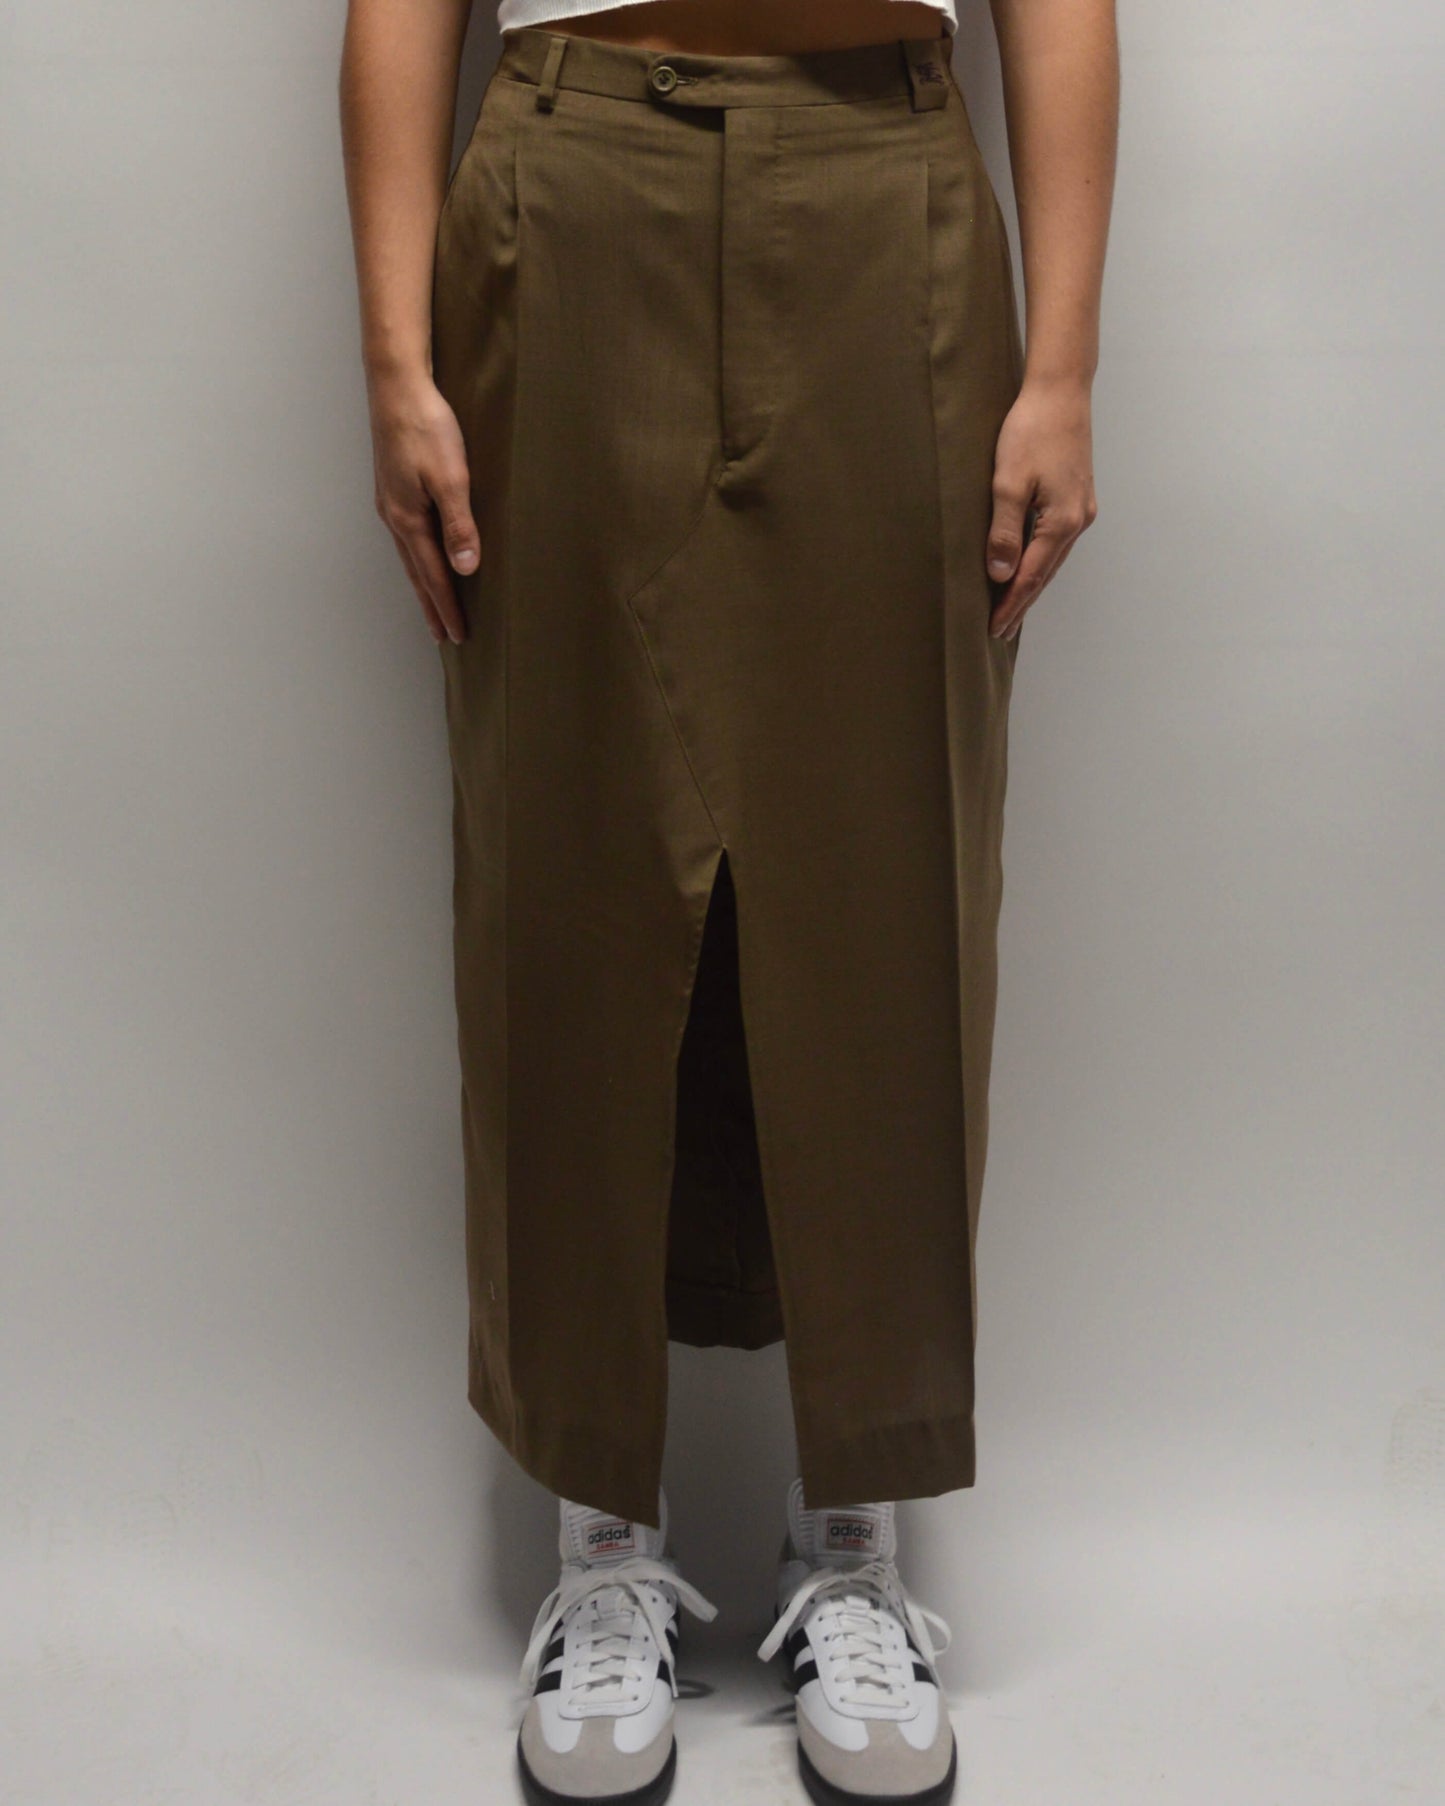 Long Skirt - Burberry Lighter Brown (XS/S)